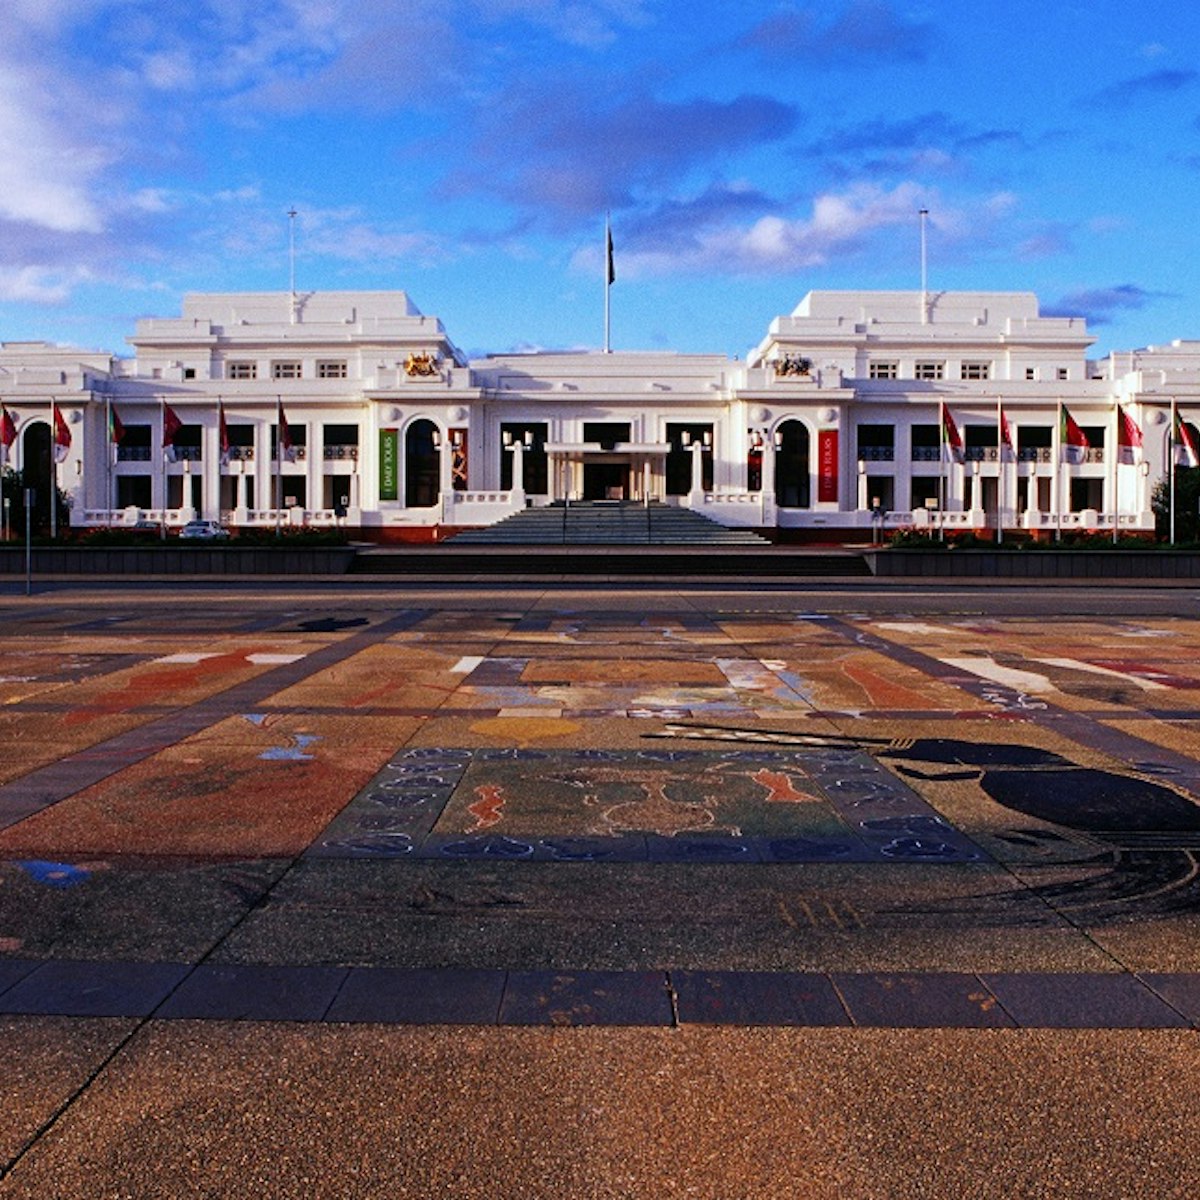 Australia, Australian Capital Territory (ACT), Canberra